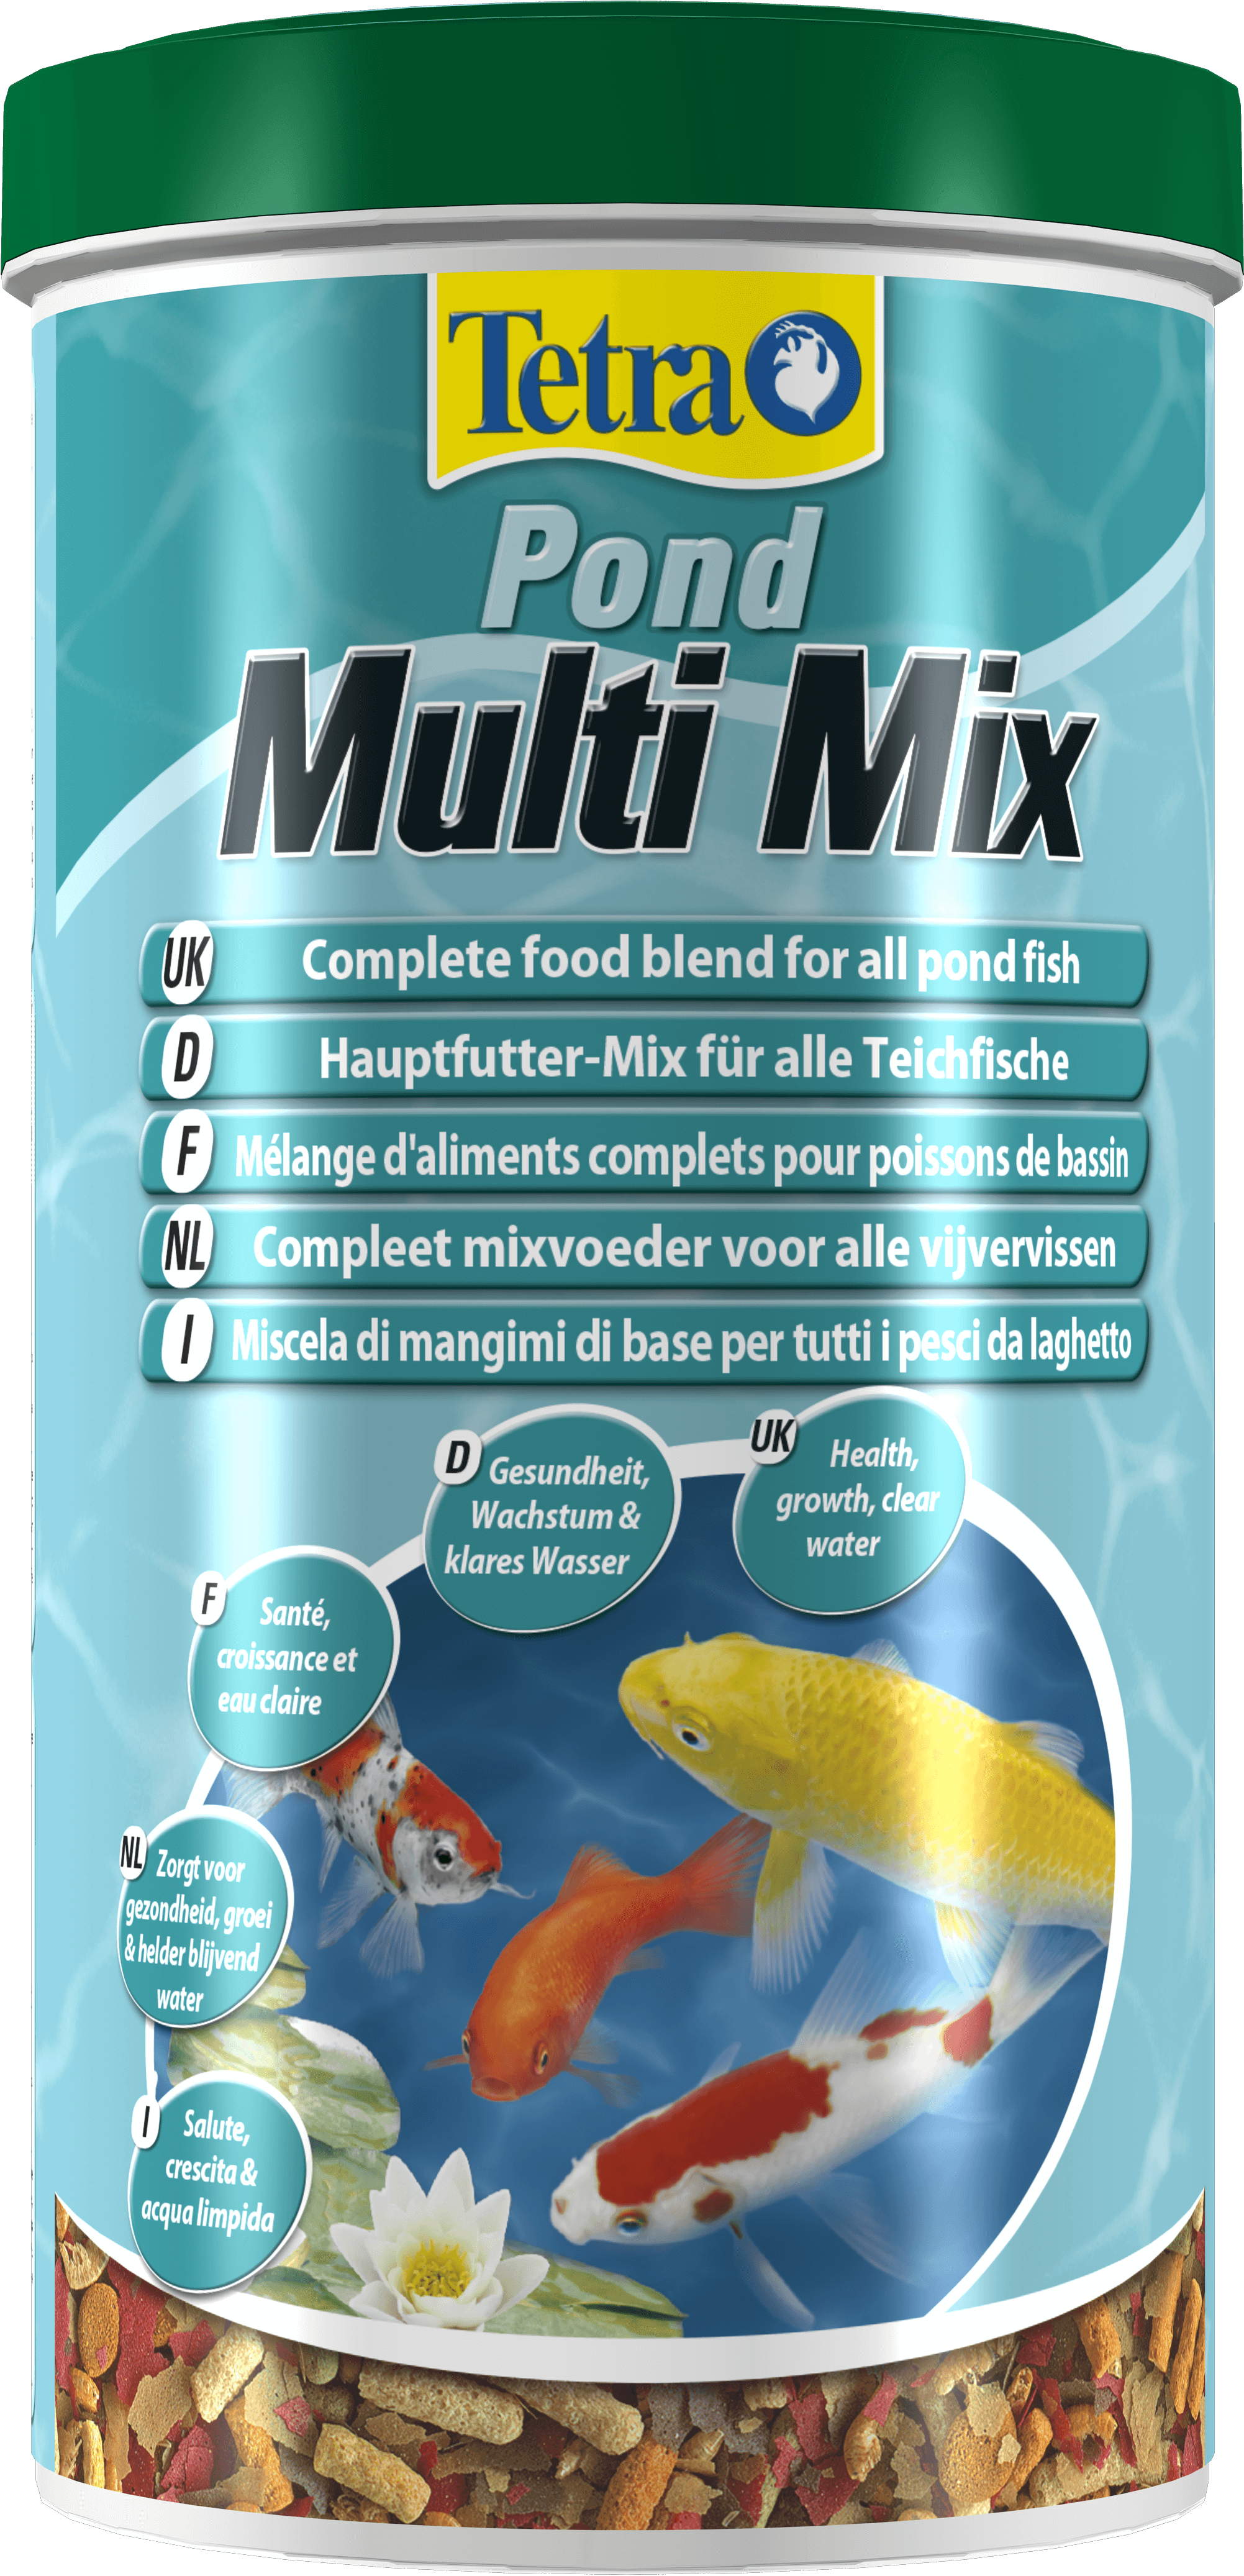 Nourriture Matériel de Bassin Poissons de bassin > Tetra Pond Multi Mix 1L  - 8.08€